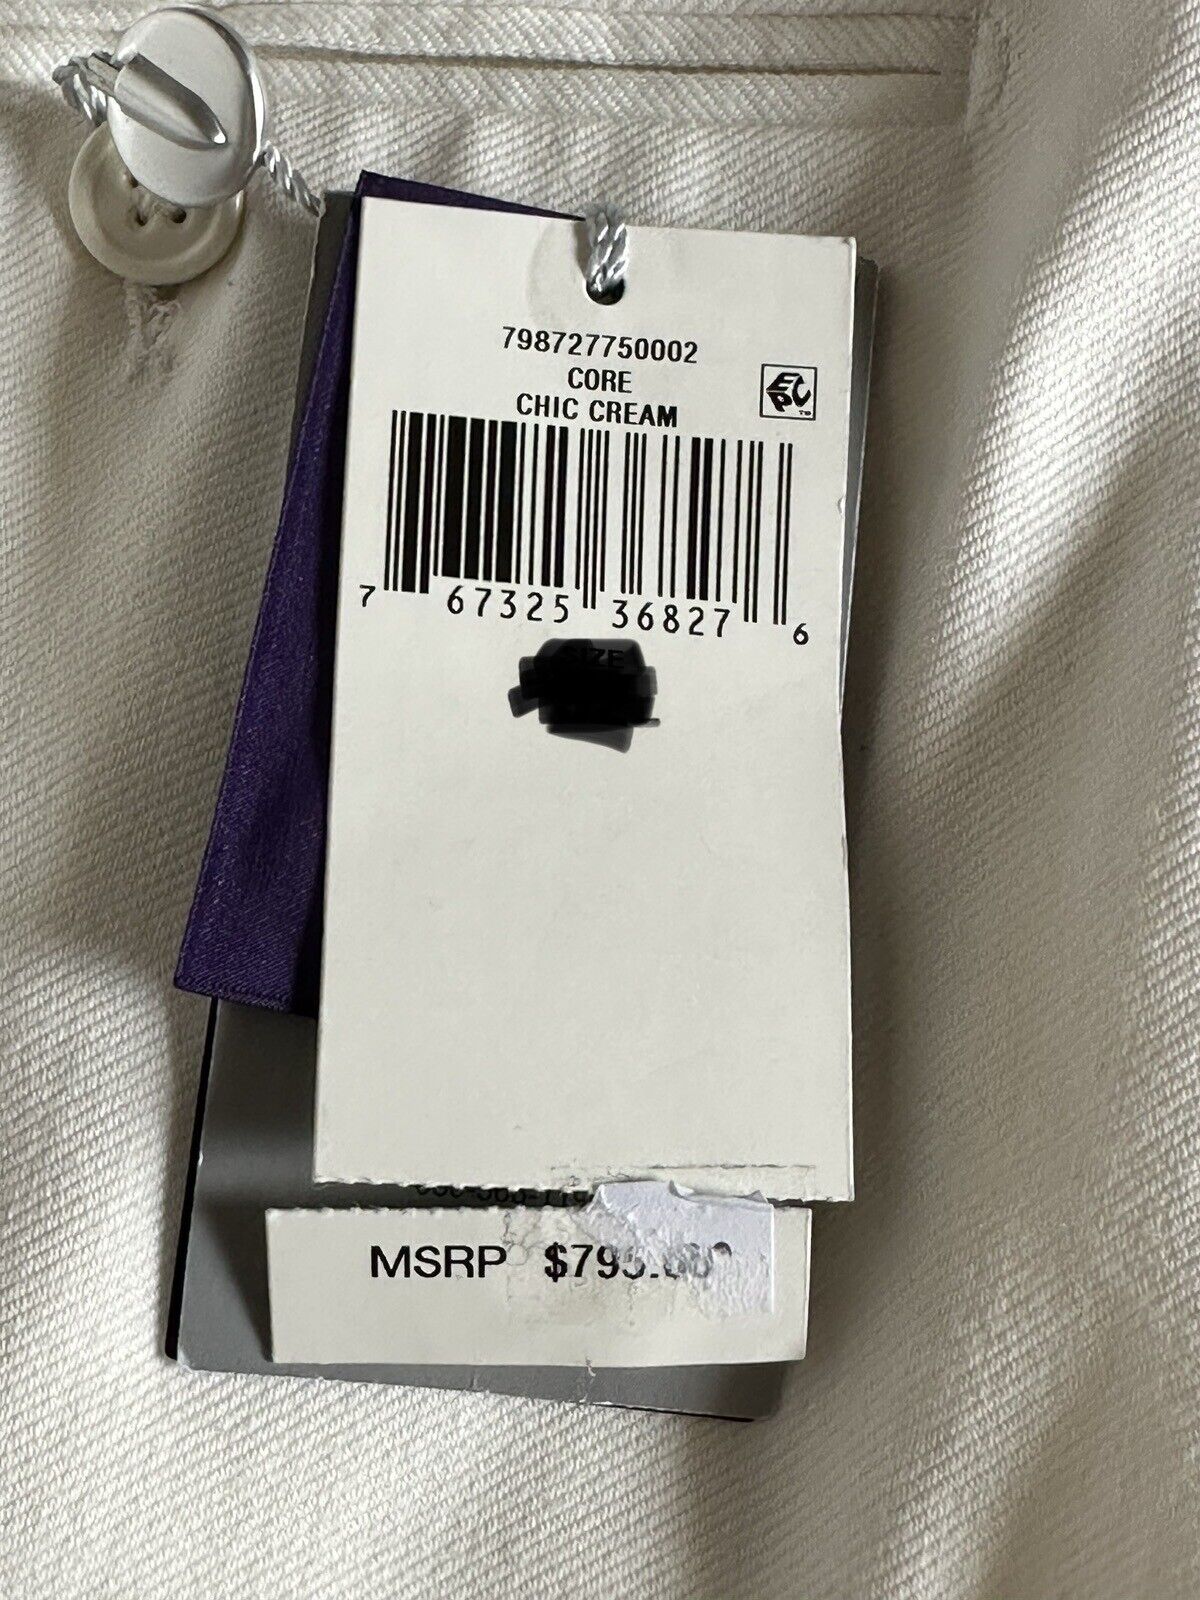 NWT $695 Ralph Lauren Purple Label Men's Viscose/Silk Cream Dress Pants 30 US IT